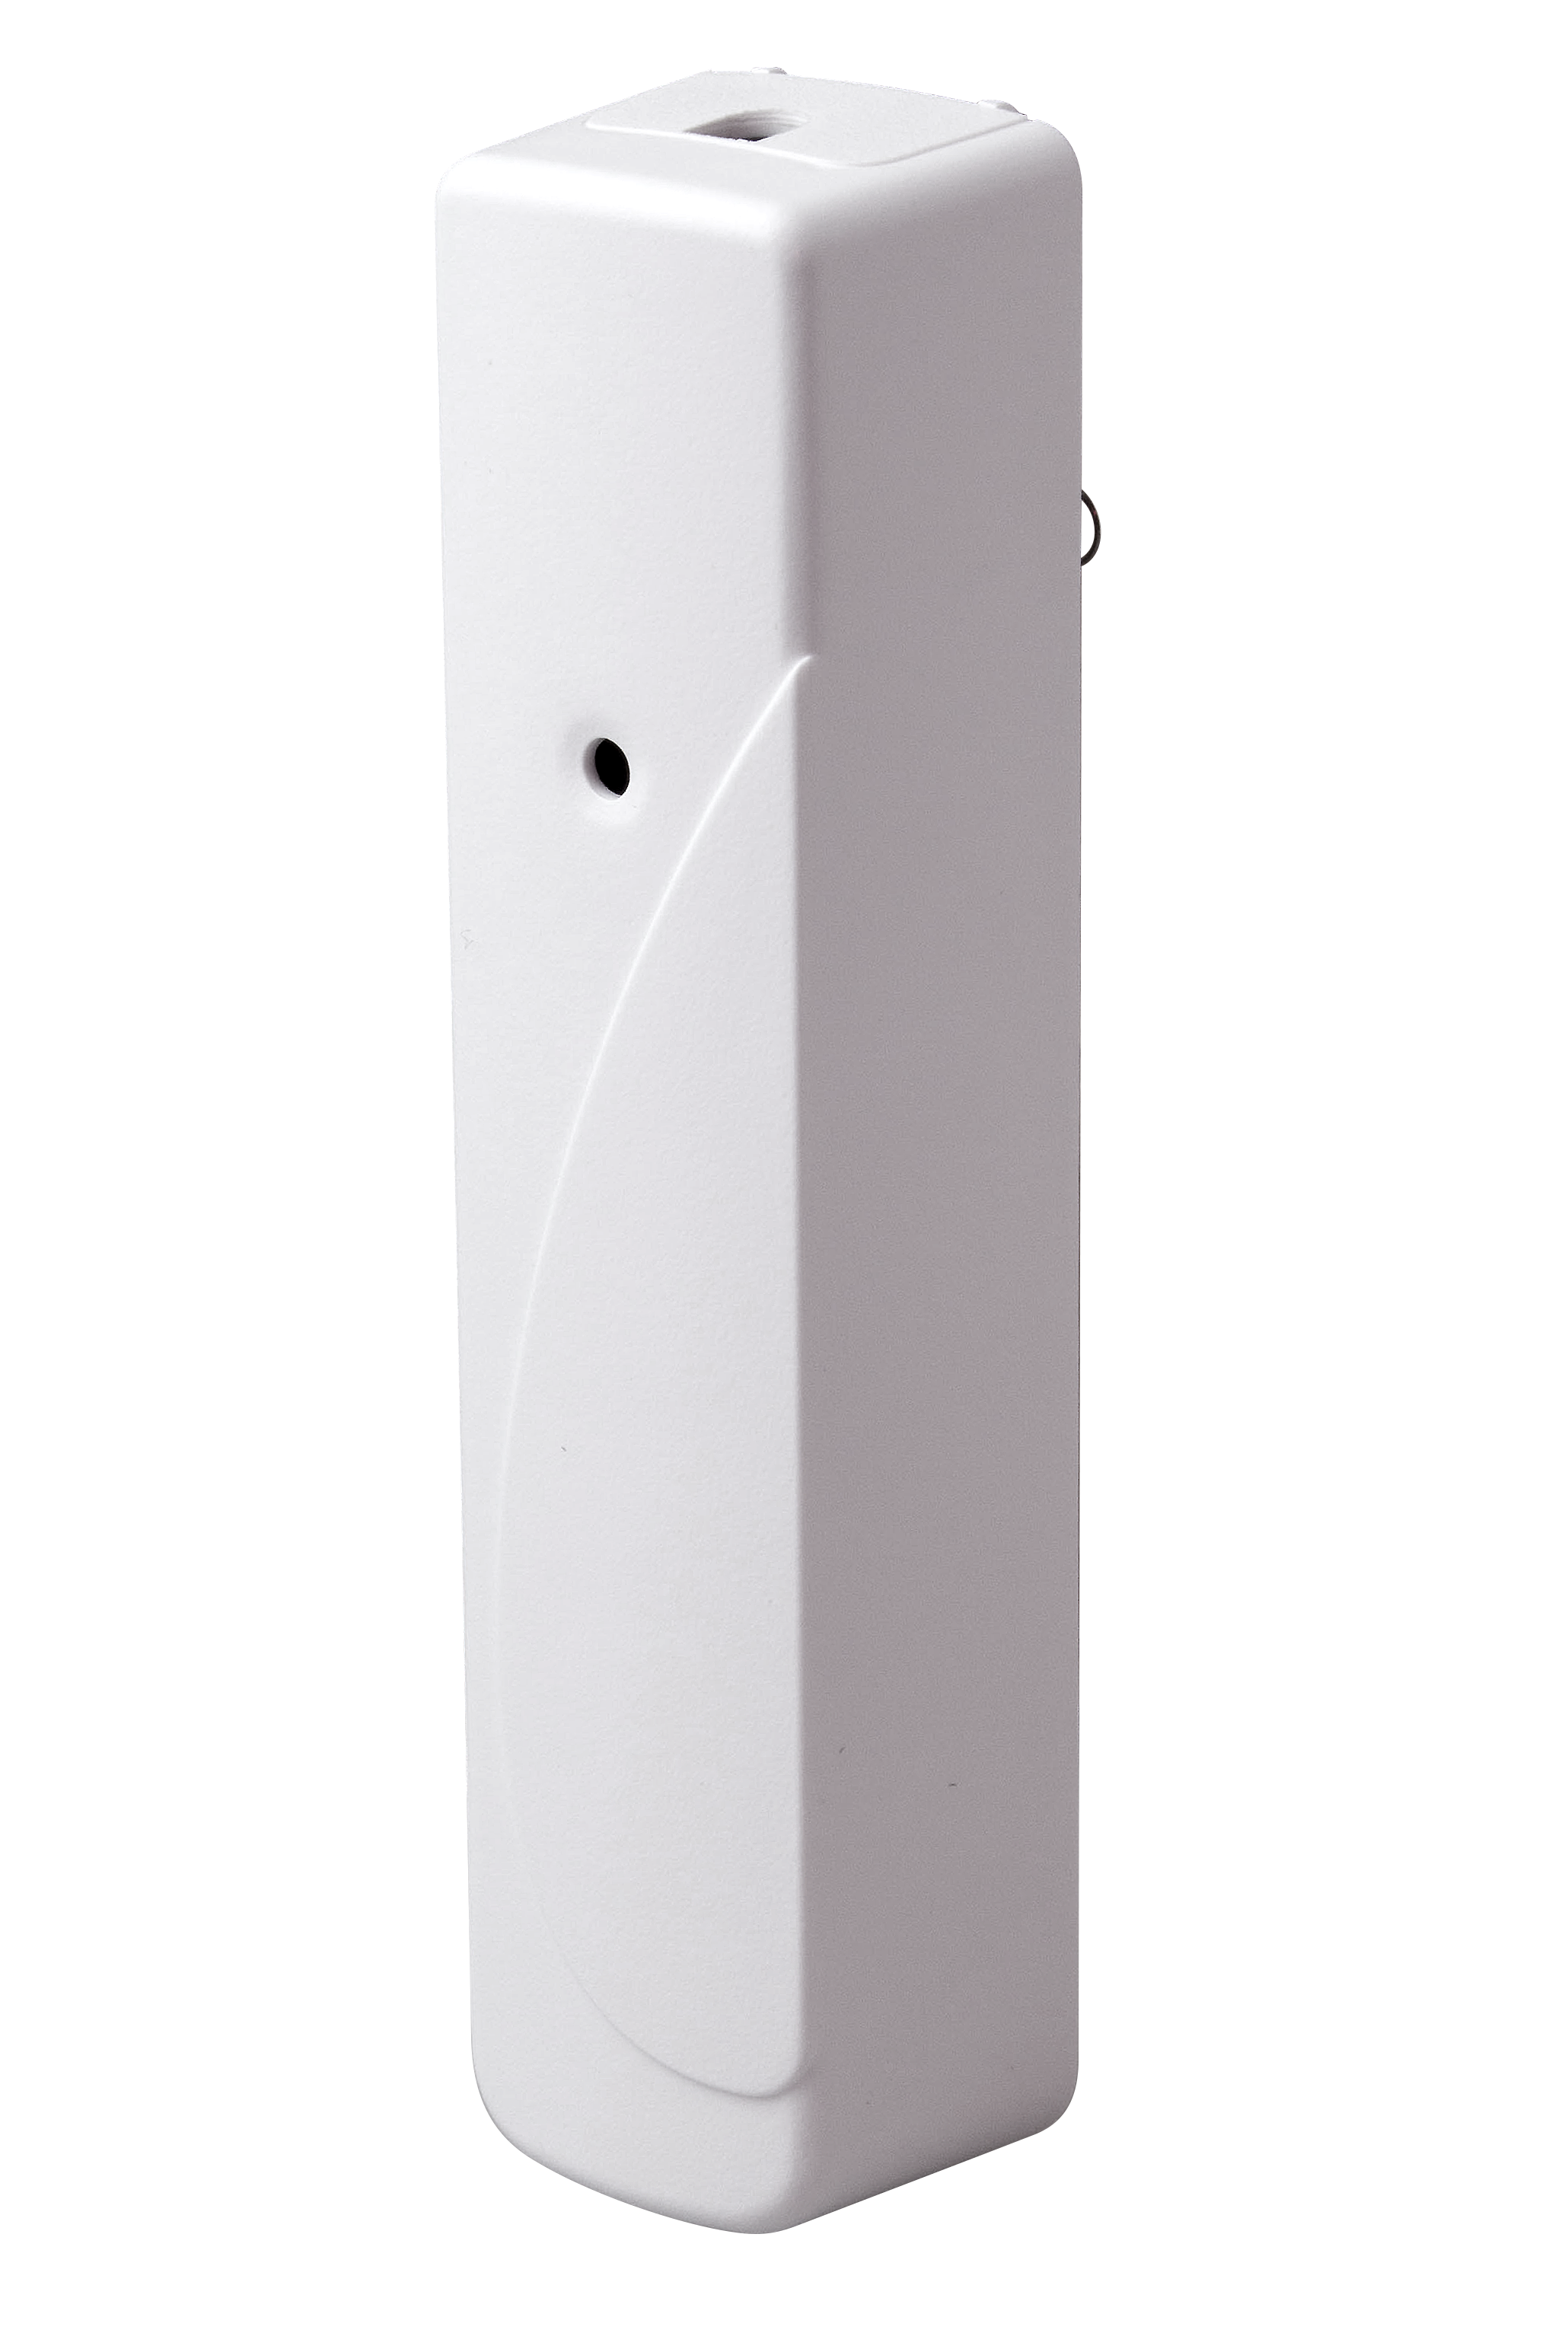 LUPUSEC - Temperature sensor with external probe.